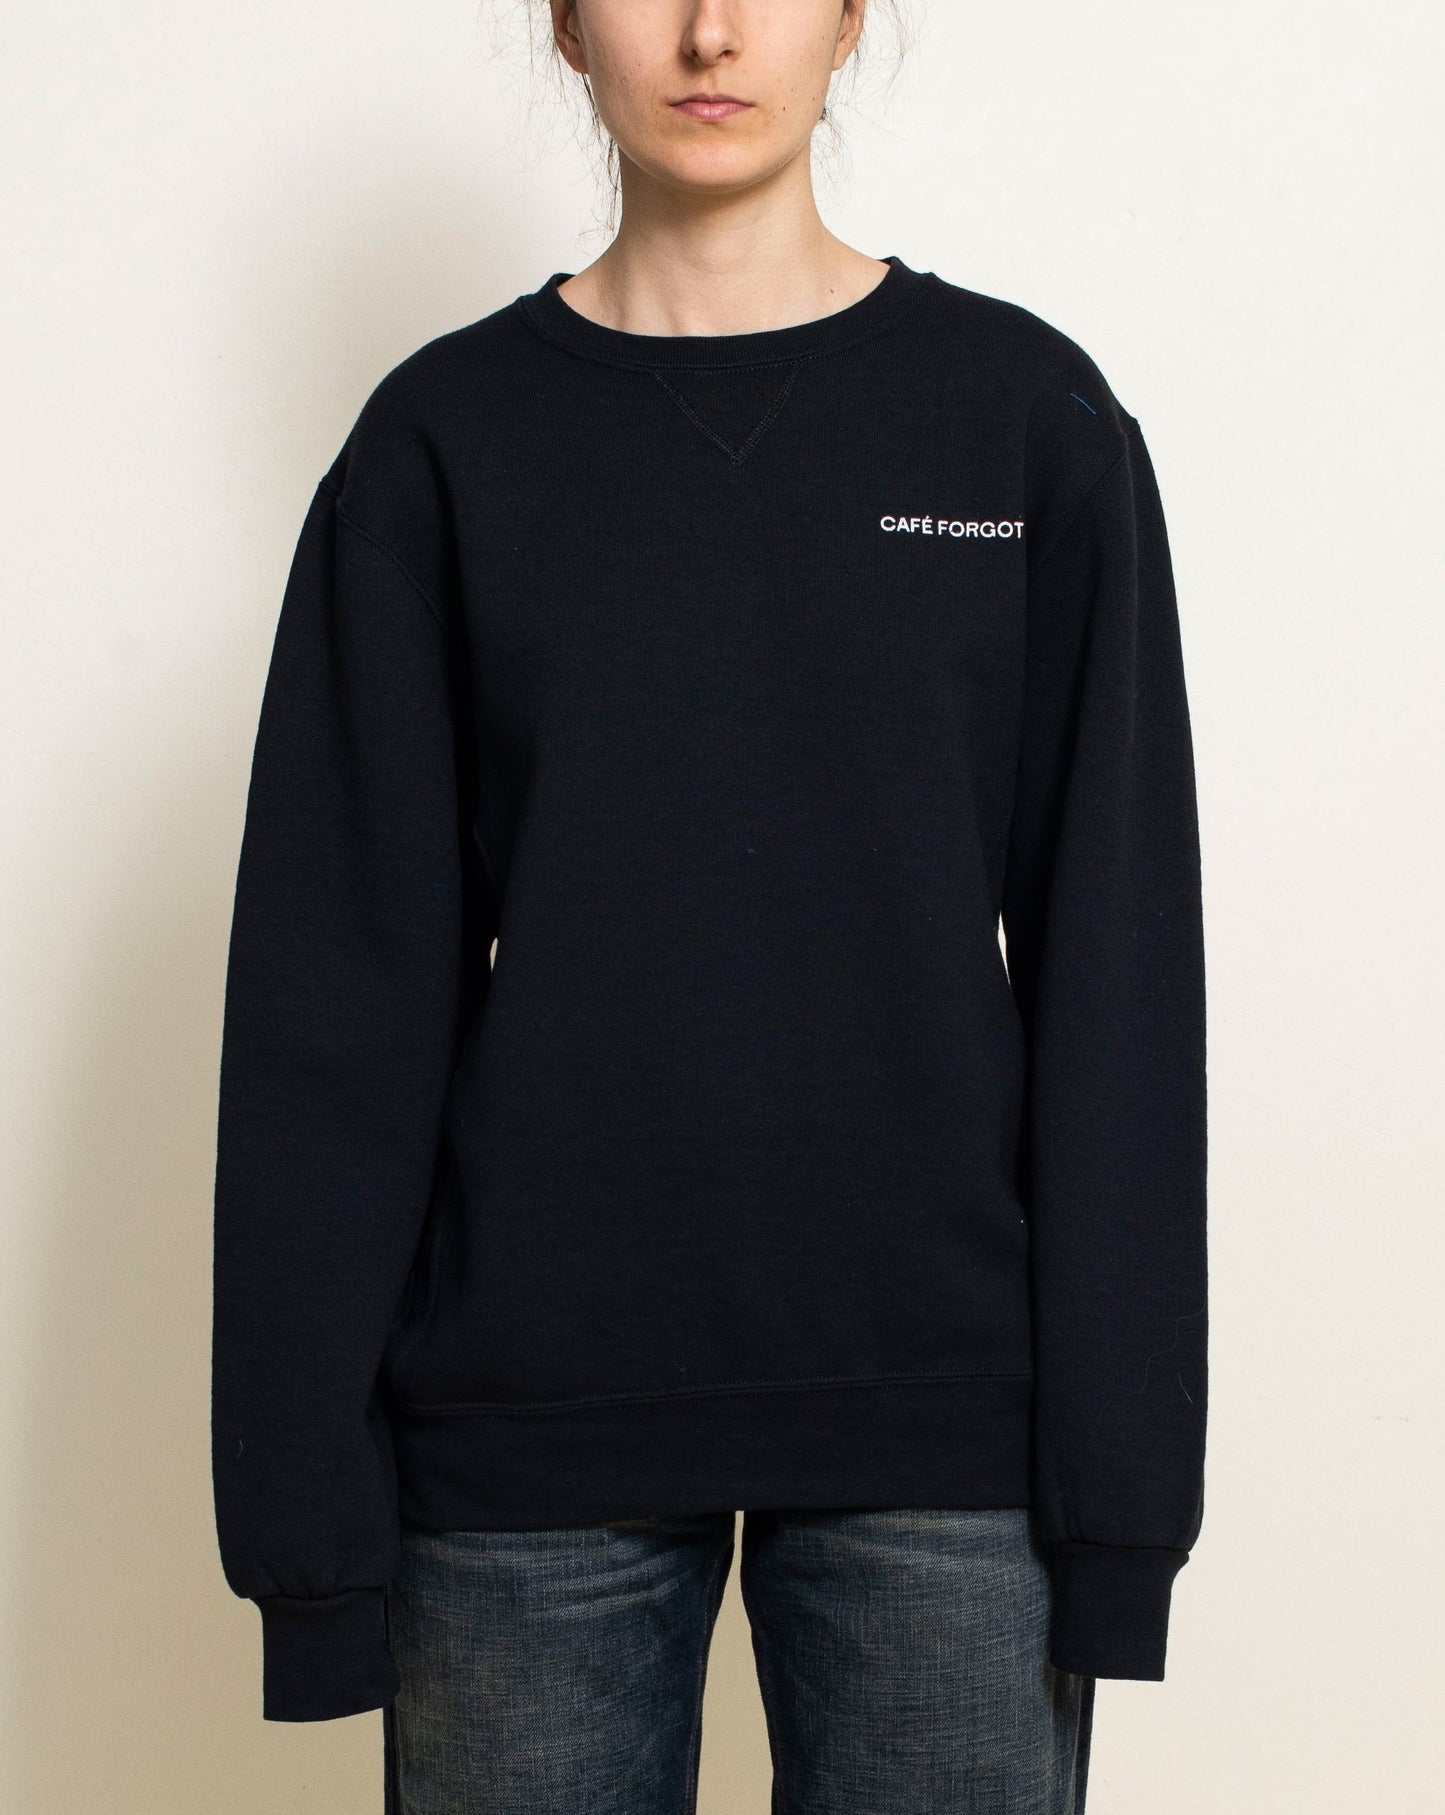 Café Forgot - CF Black/Charcoal Sweatshirt